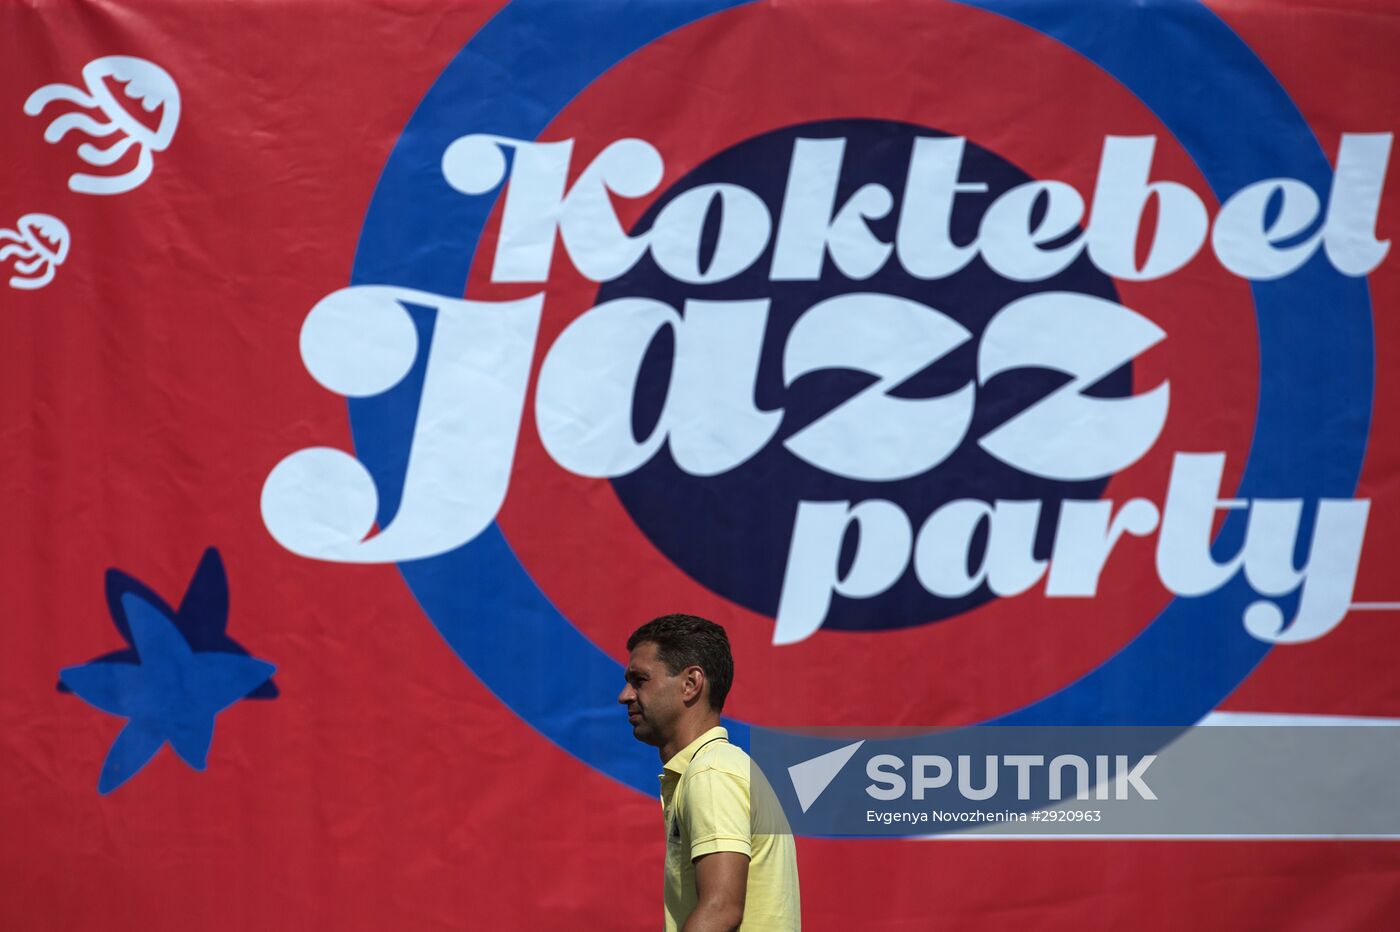 Preparation for the Koktebel Jazz Party international music festival